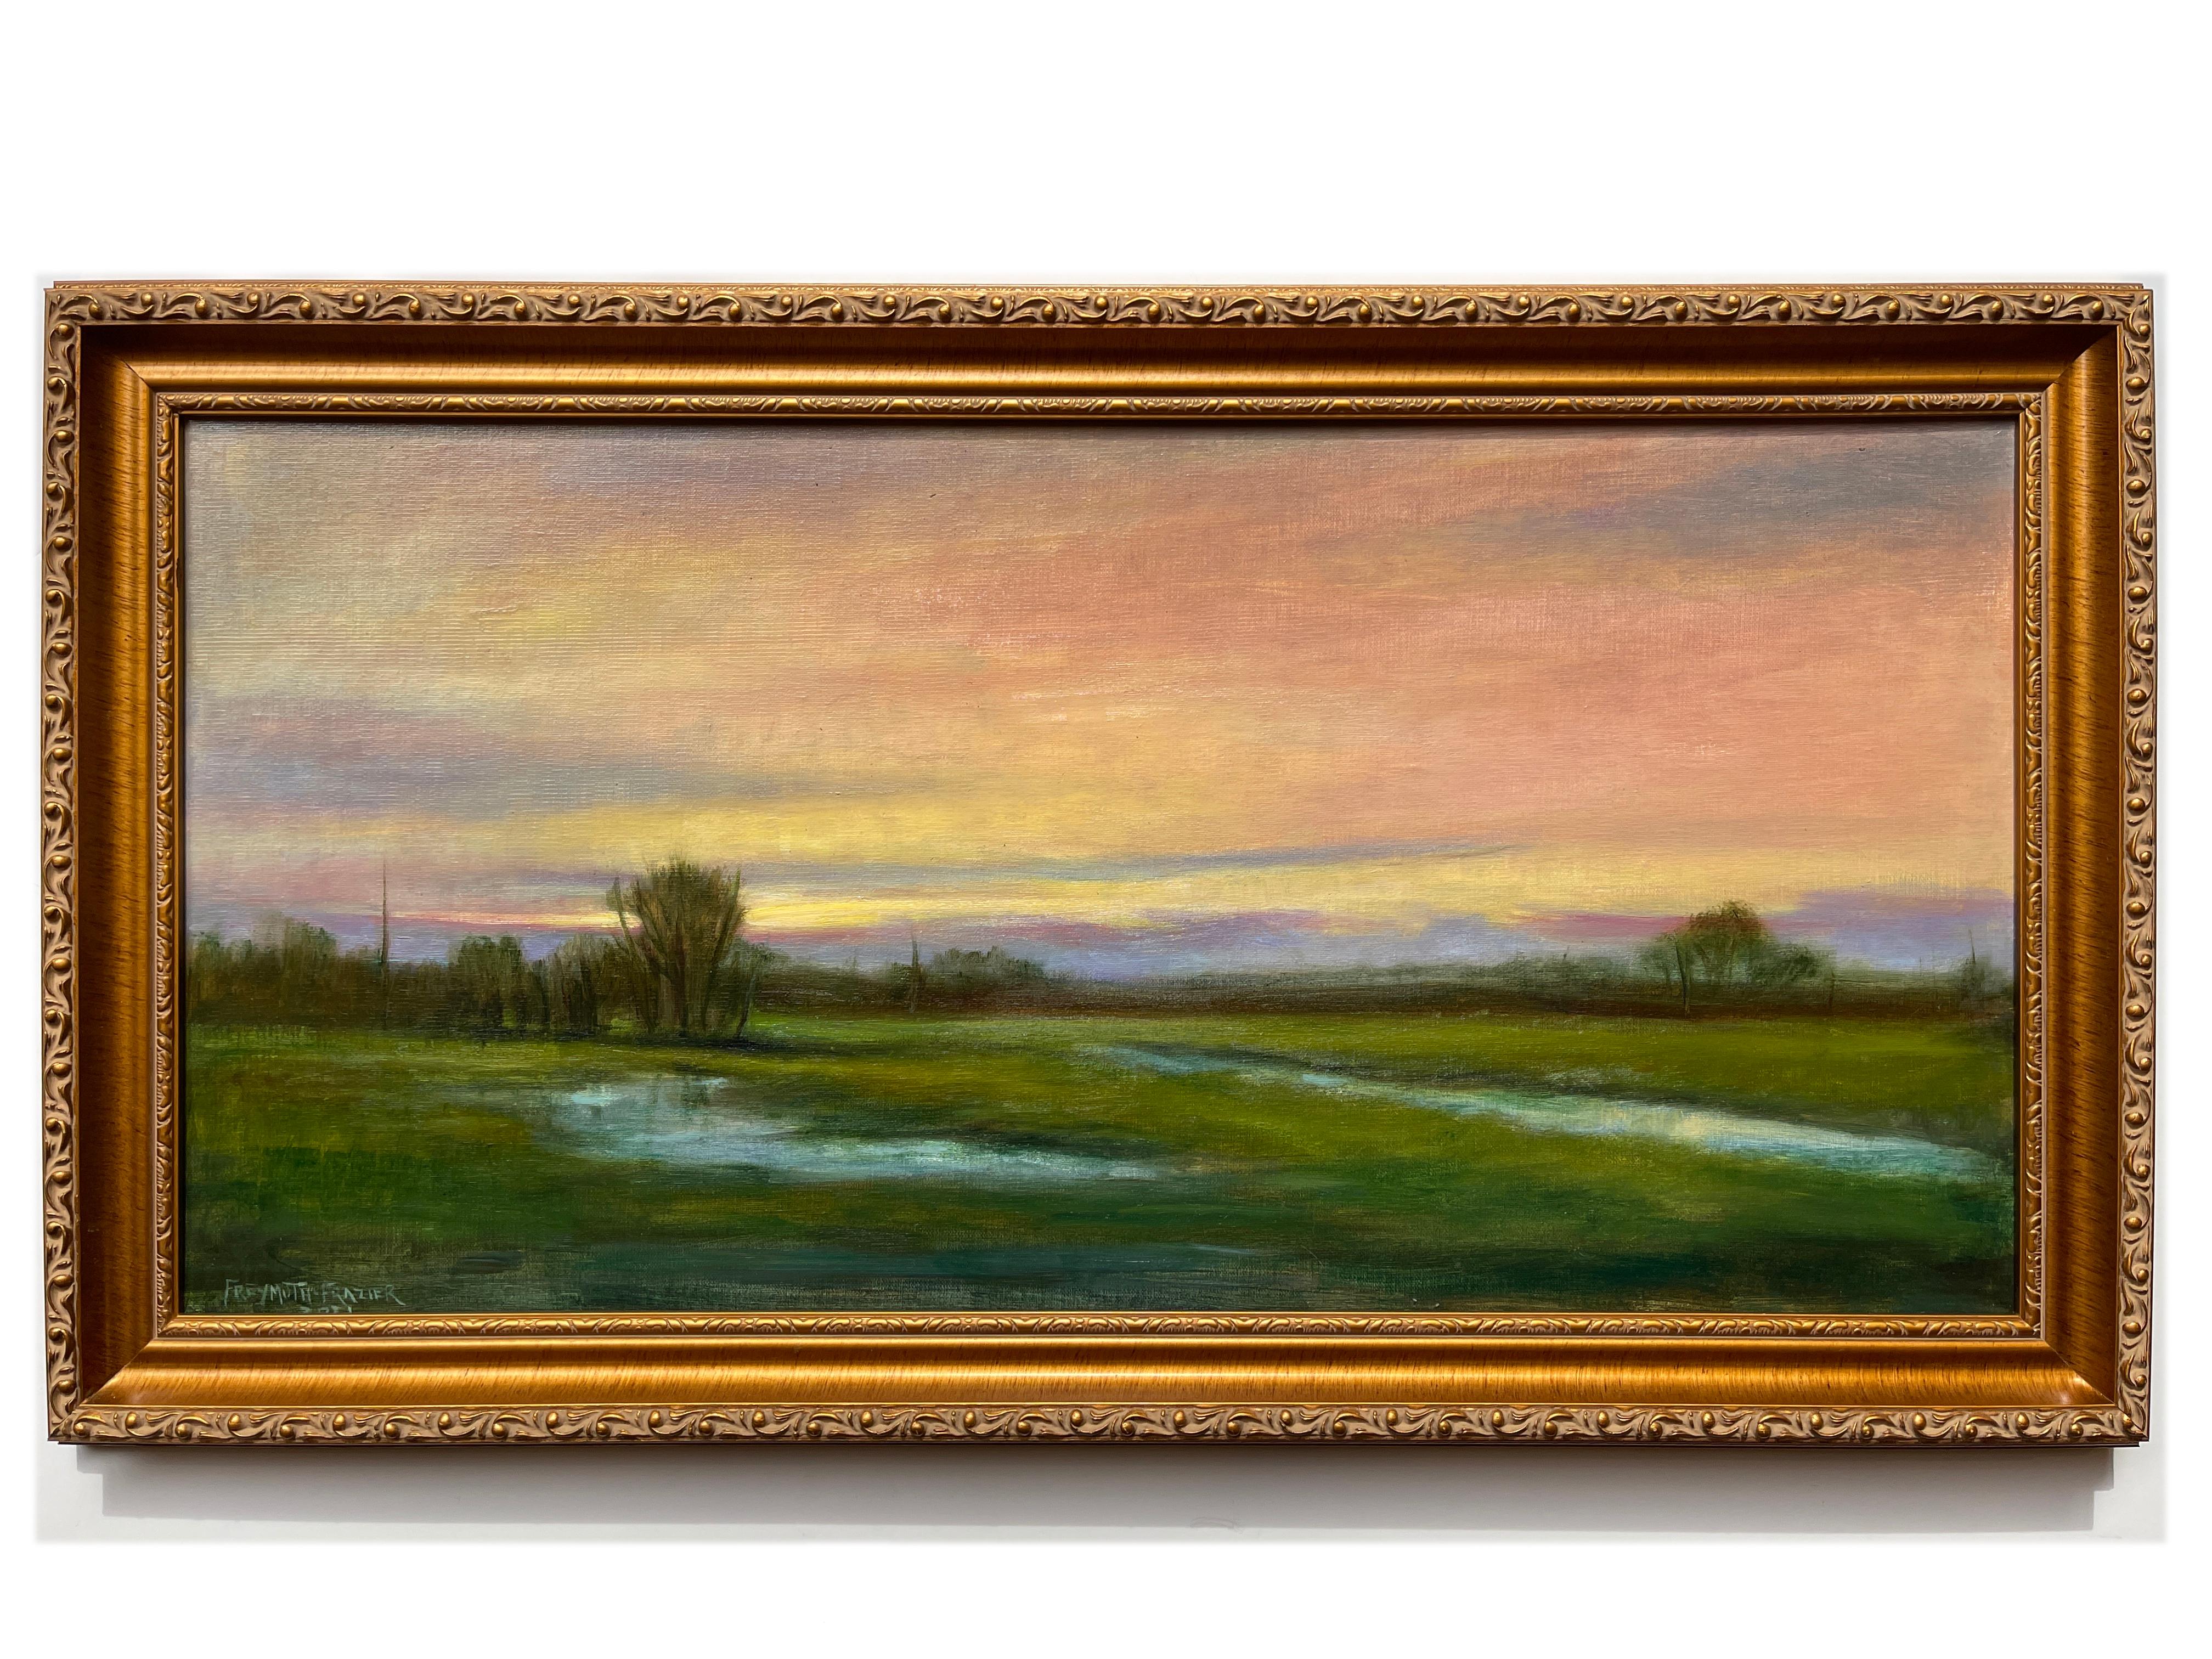 Wetlands, Reflective Marsh on a Spring Sky, Soft Romantic Colors, Original Oil 1